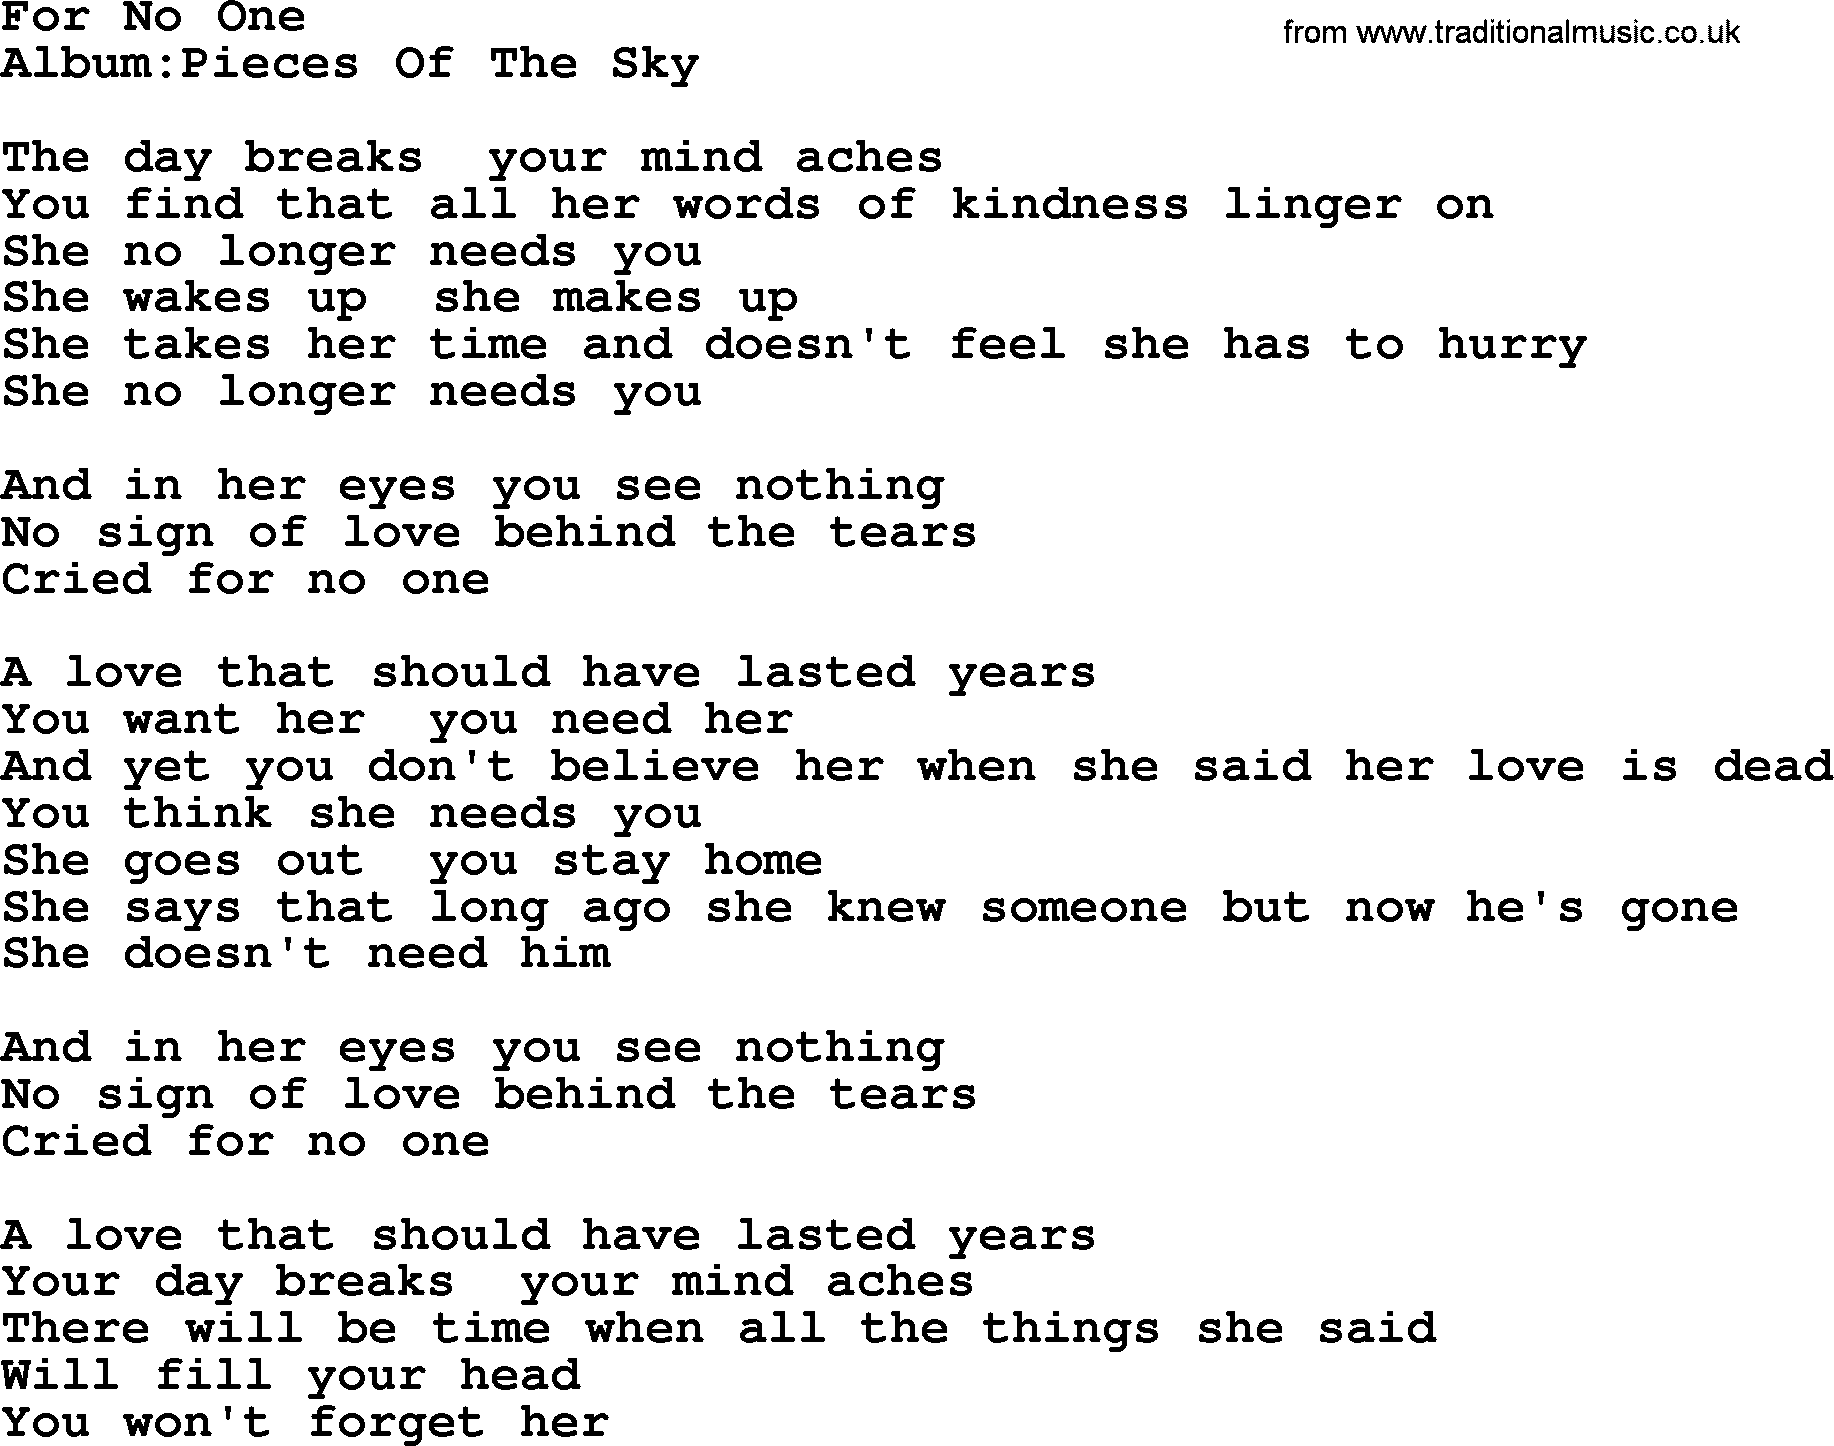 Emmylou Harris song: For No One lyrics